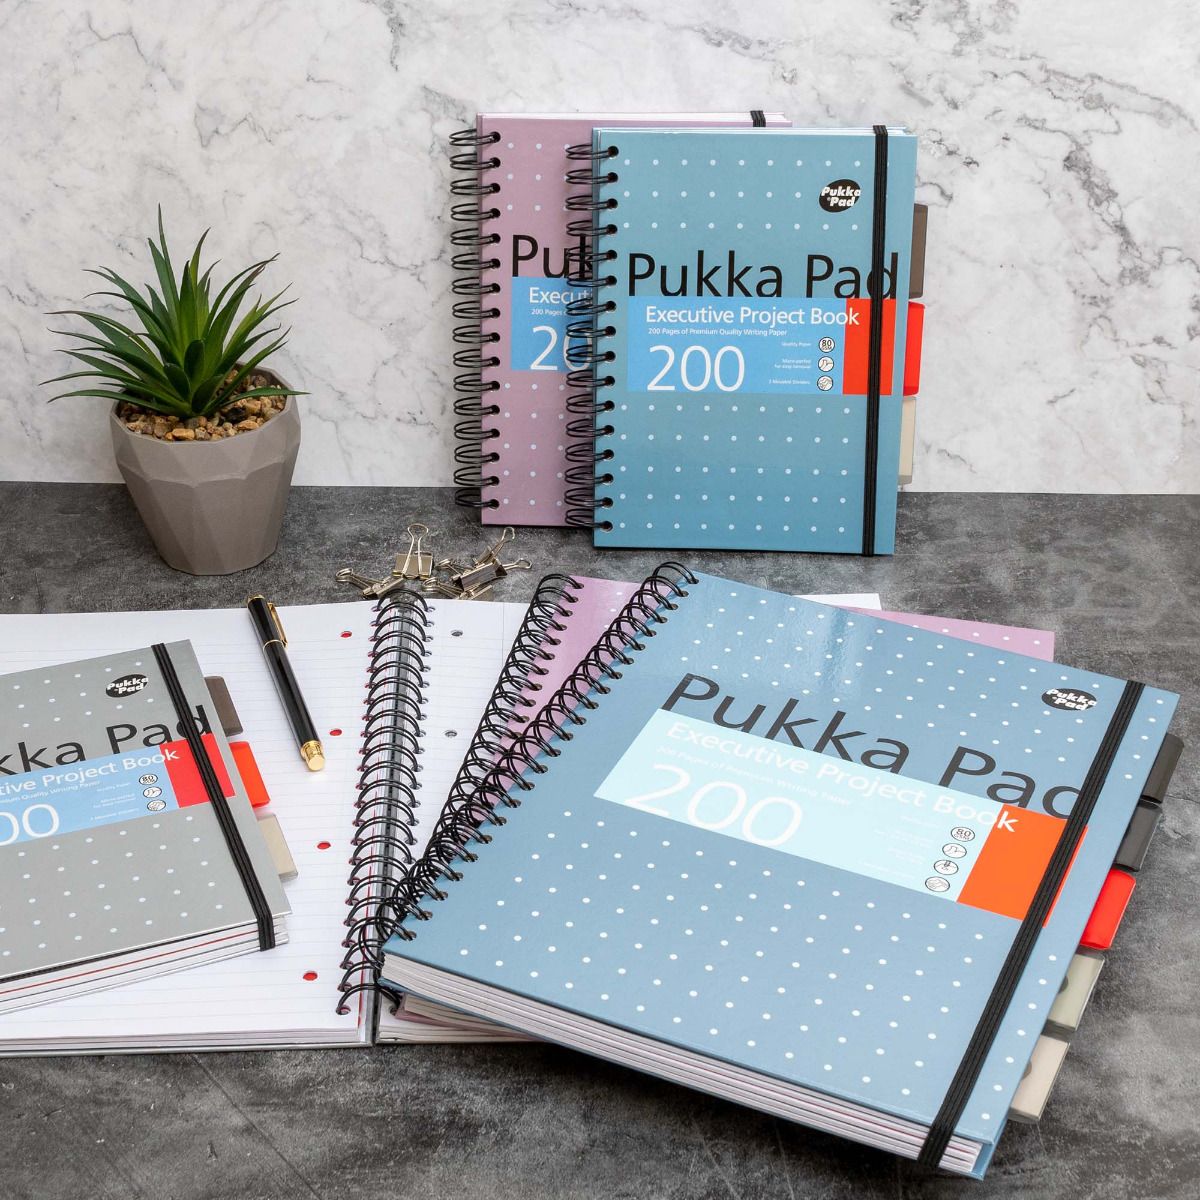 Caiet cu spirala si separatoare Pukka Pads Project Book Metallic A4 200 pag matematica BLUE